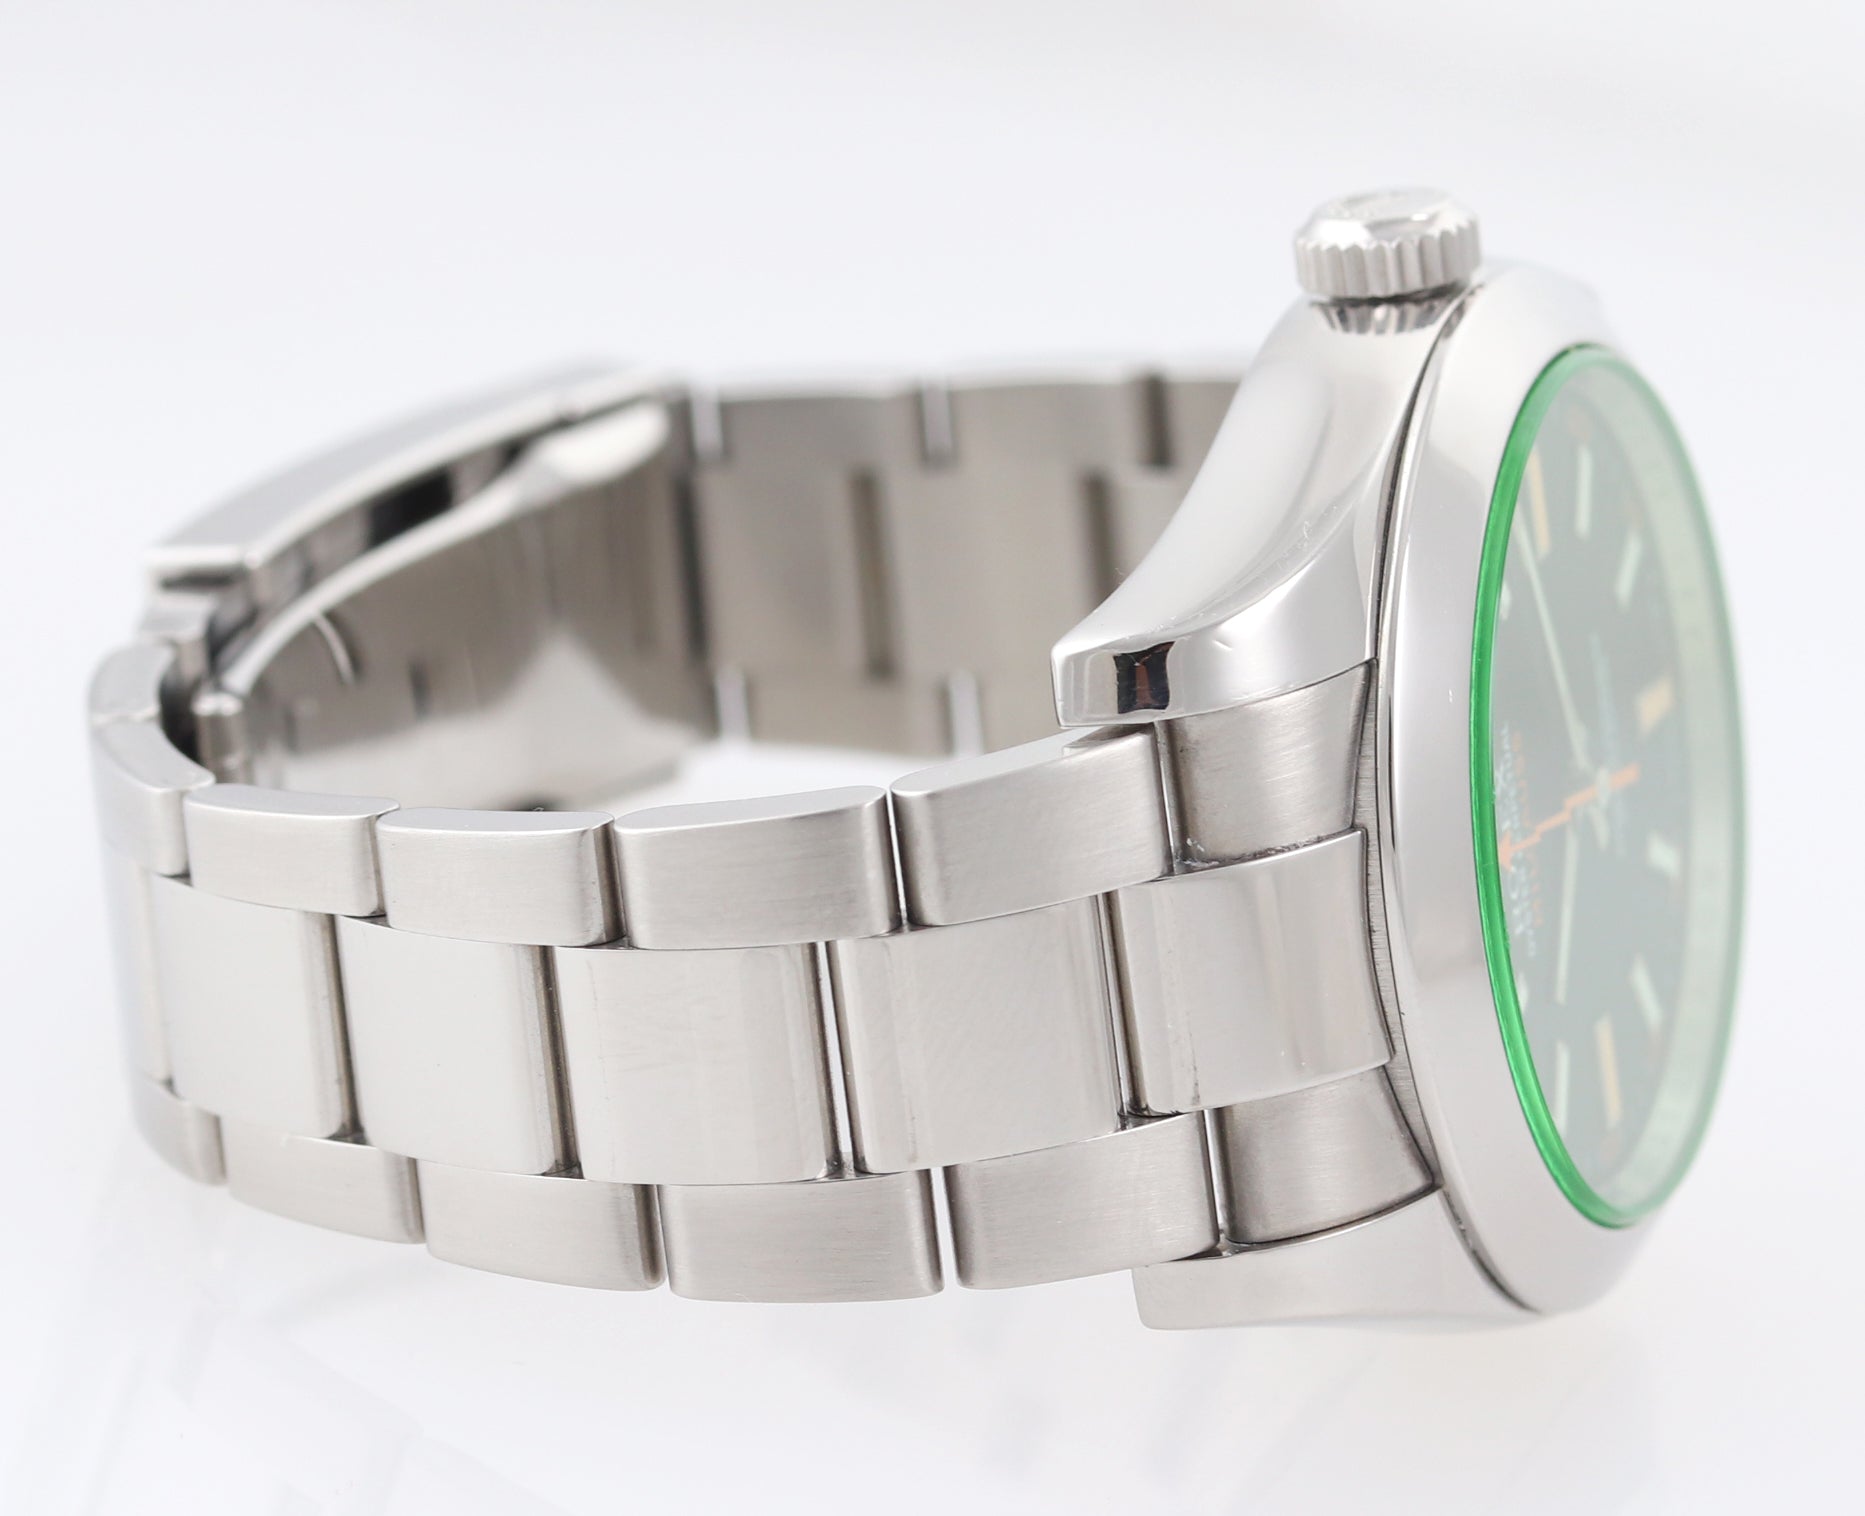 PAPERS Rolex Milgauss Green Anniversary 116400gv Steel Black Watch Box